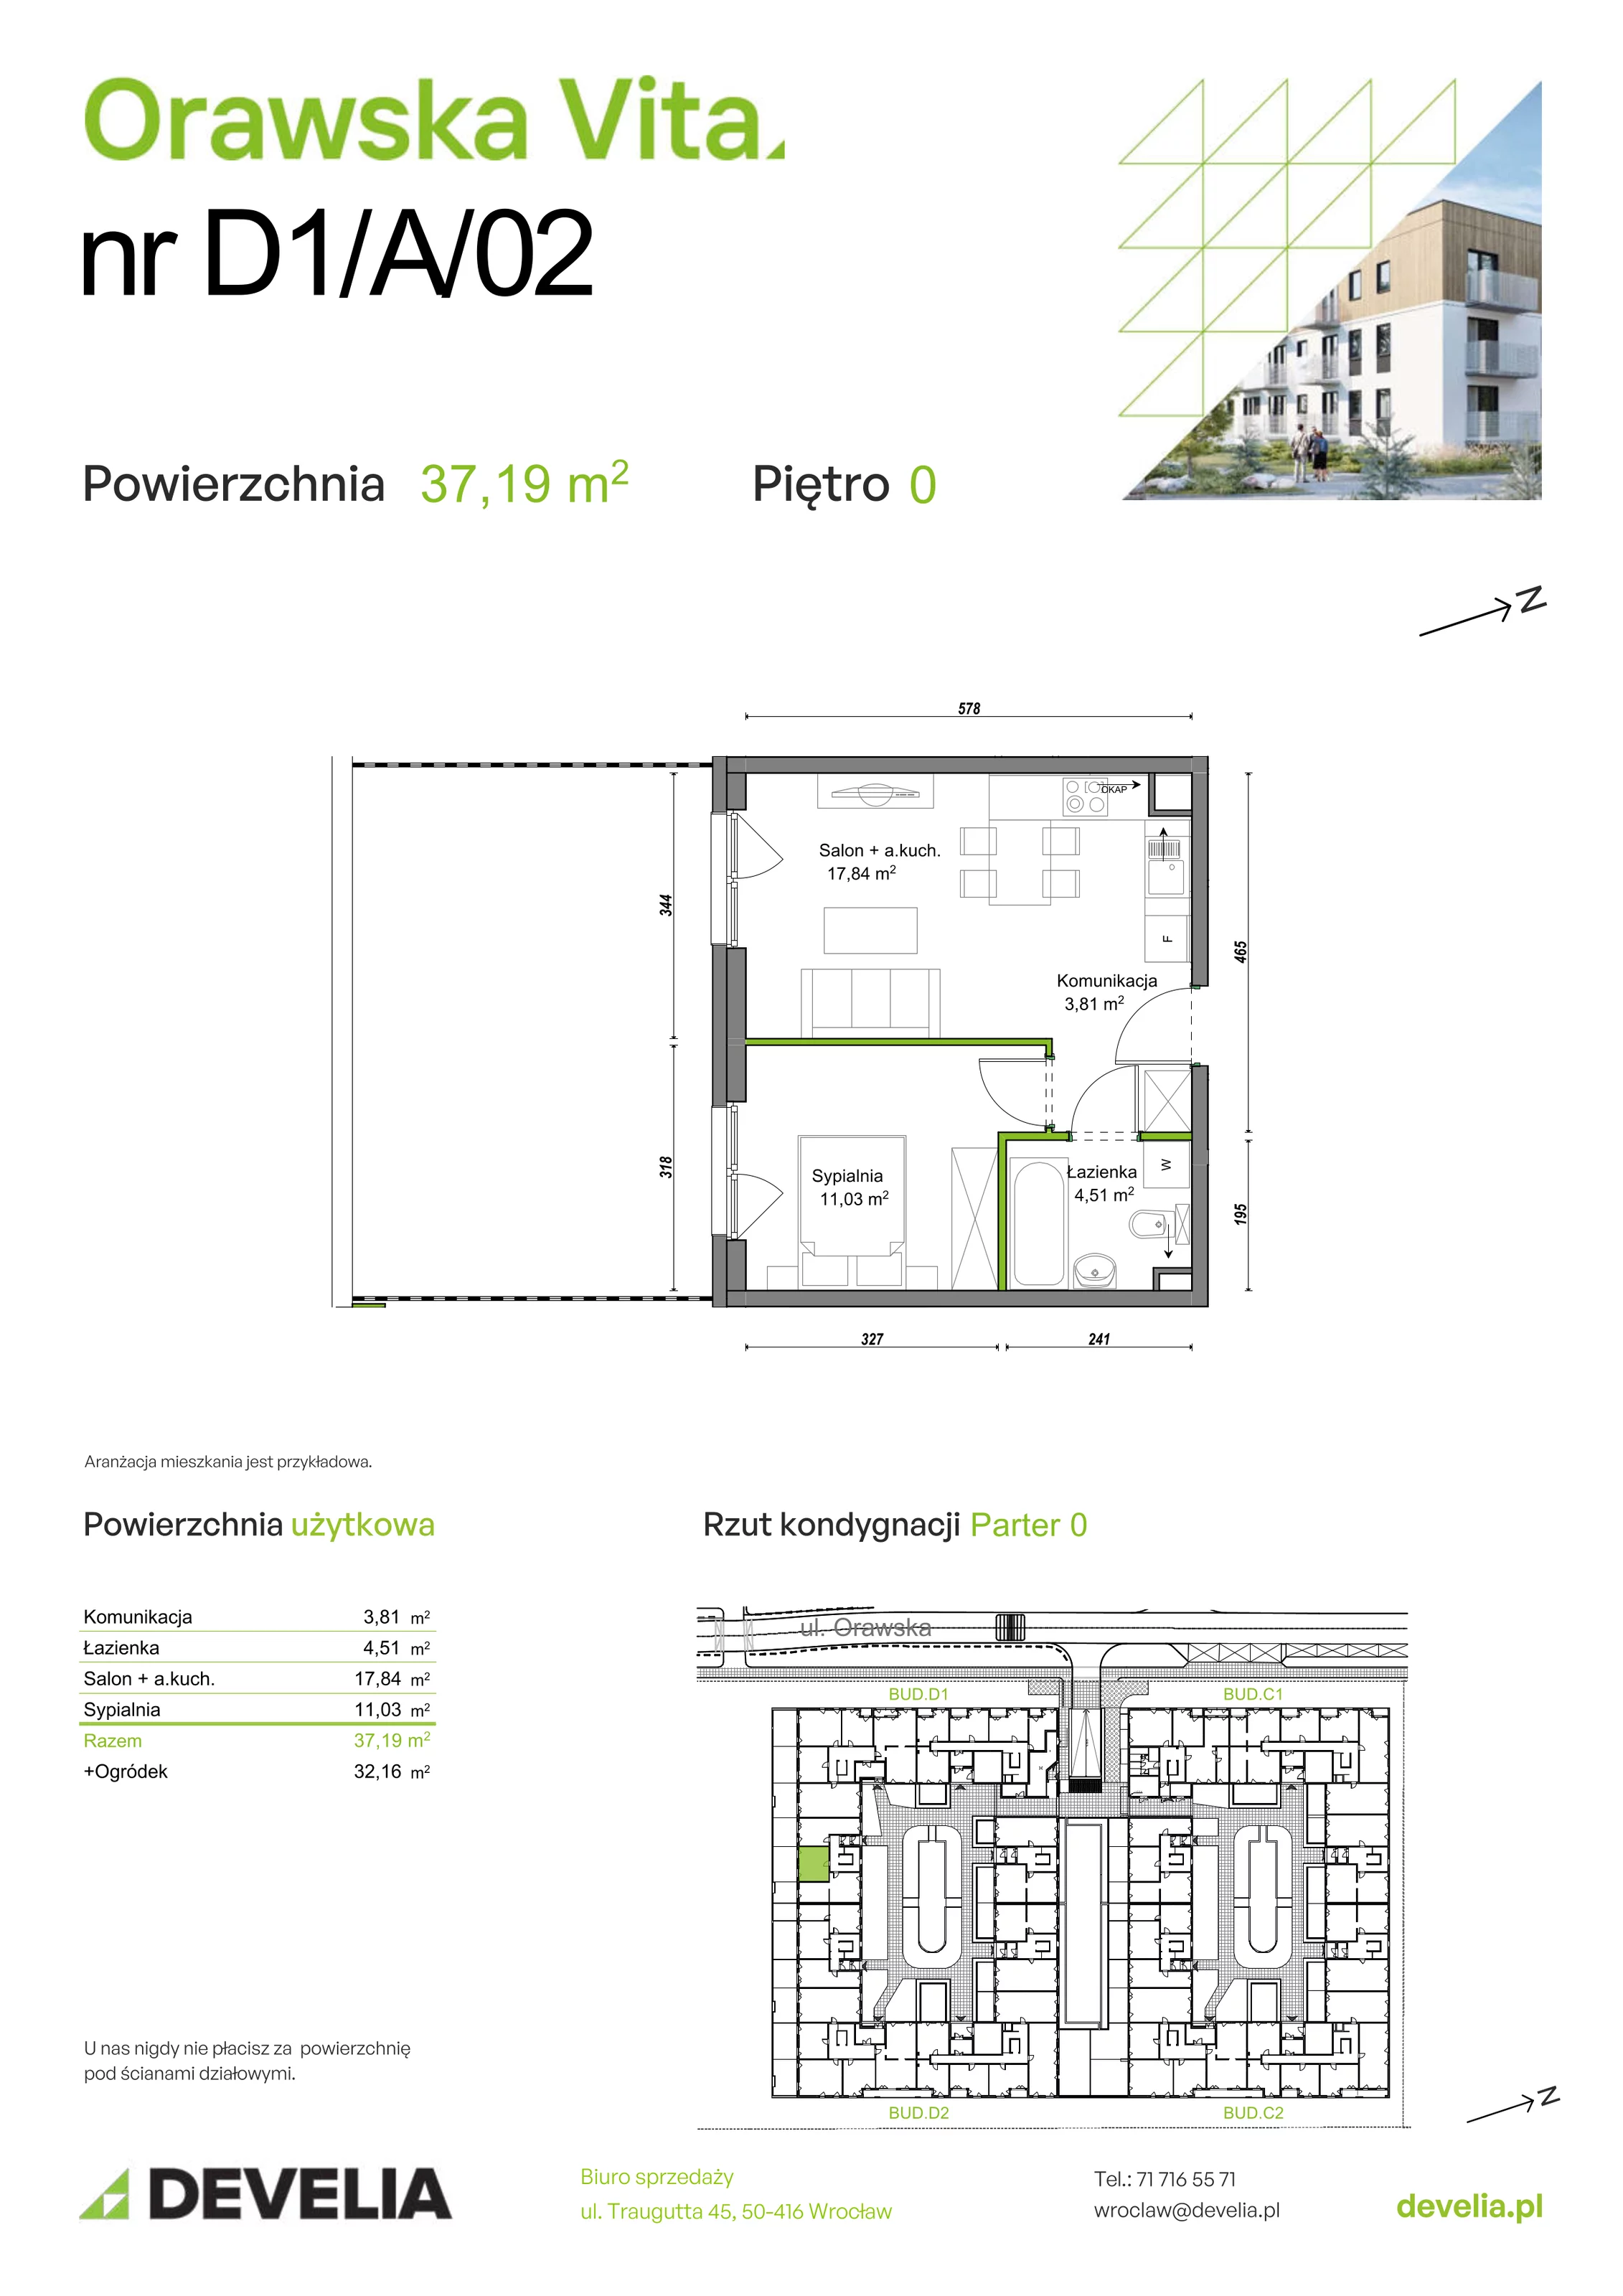 Mieszkanie 37,19 m², parter, oferta nr D1/A/02, Orawska Vita, Wrocław, Ołtaszyn, Krzyki, ul. Orawska 73